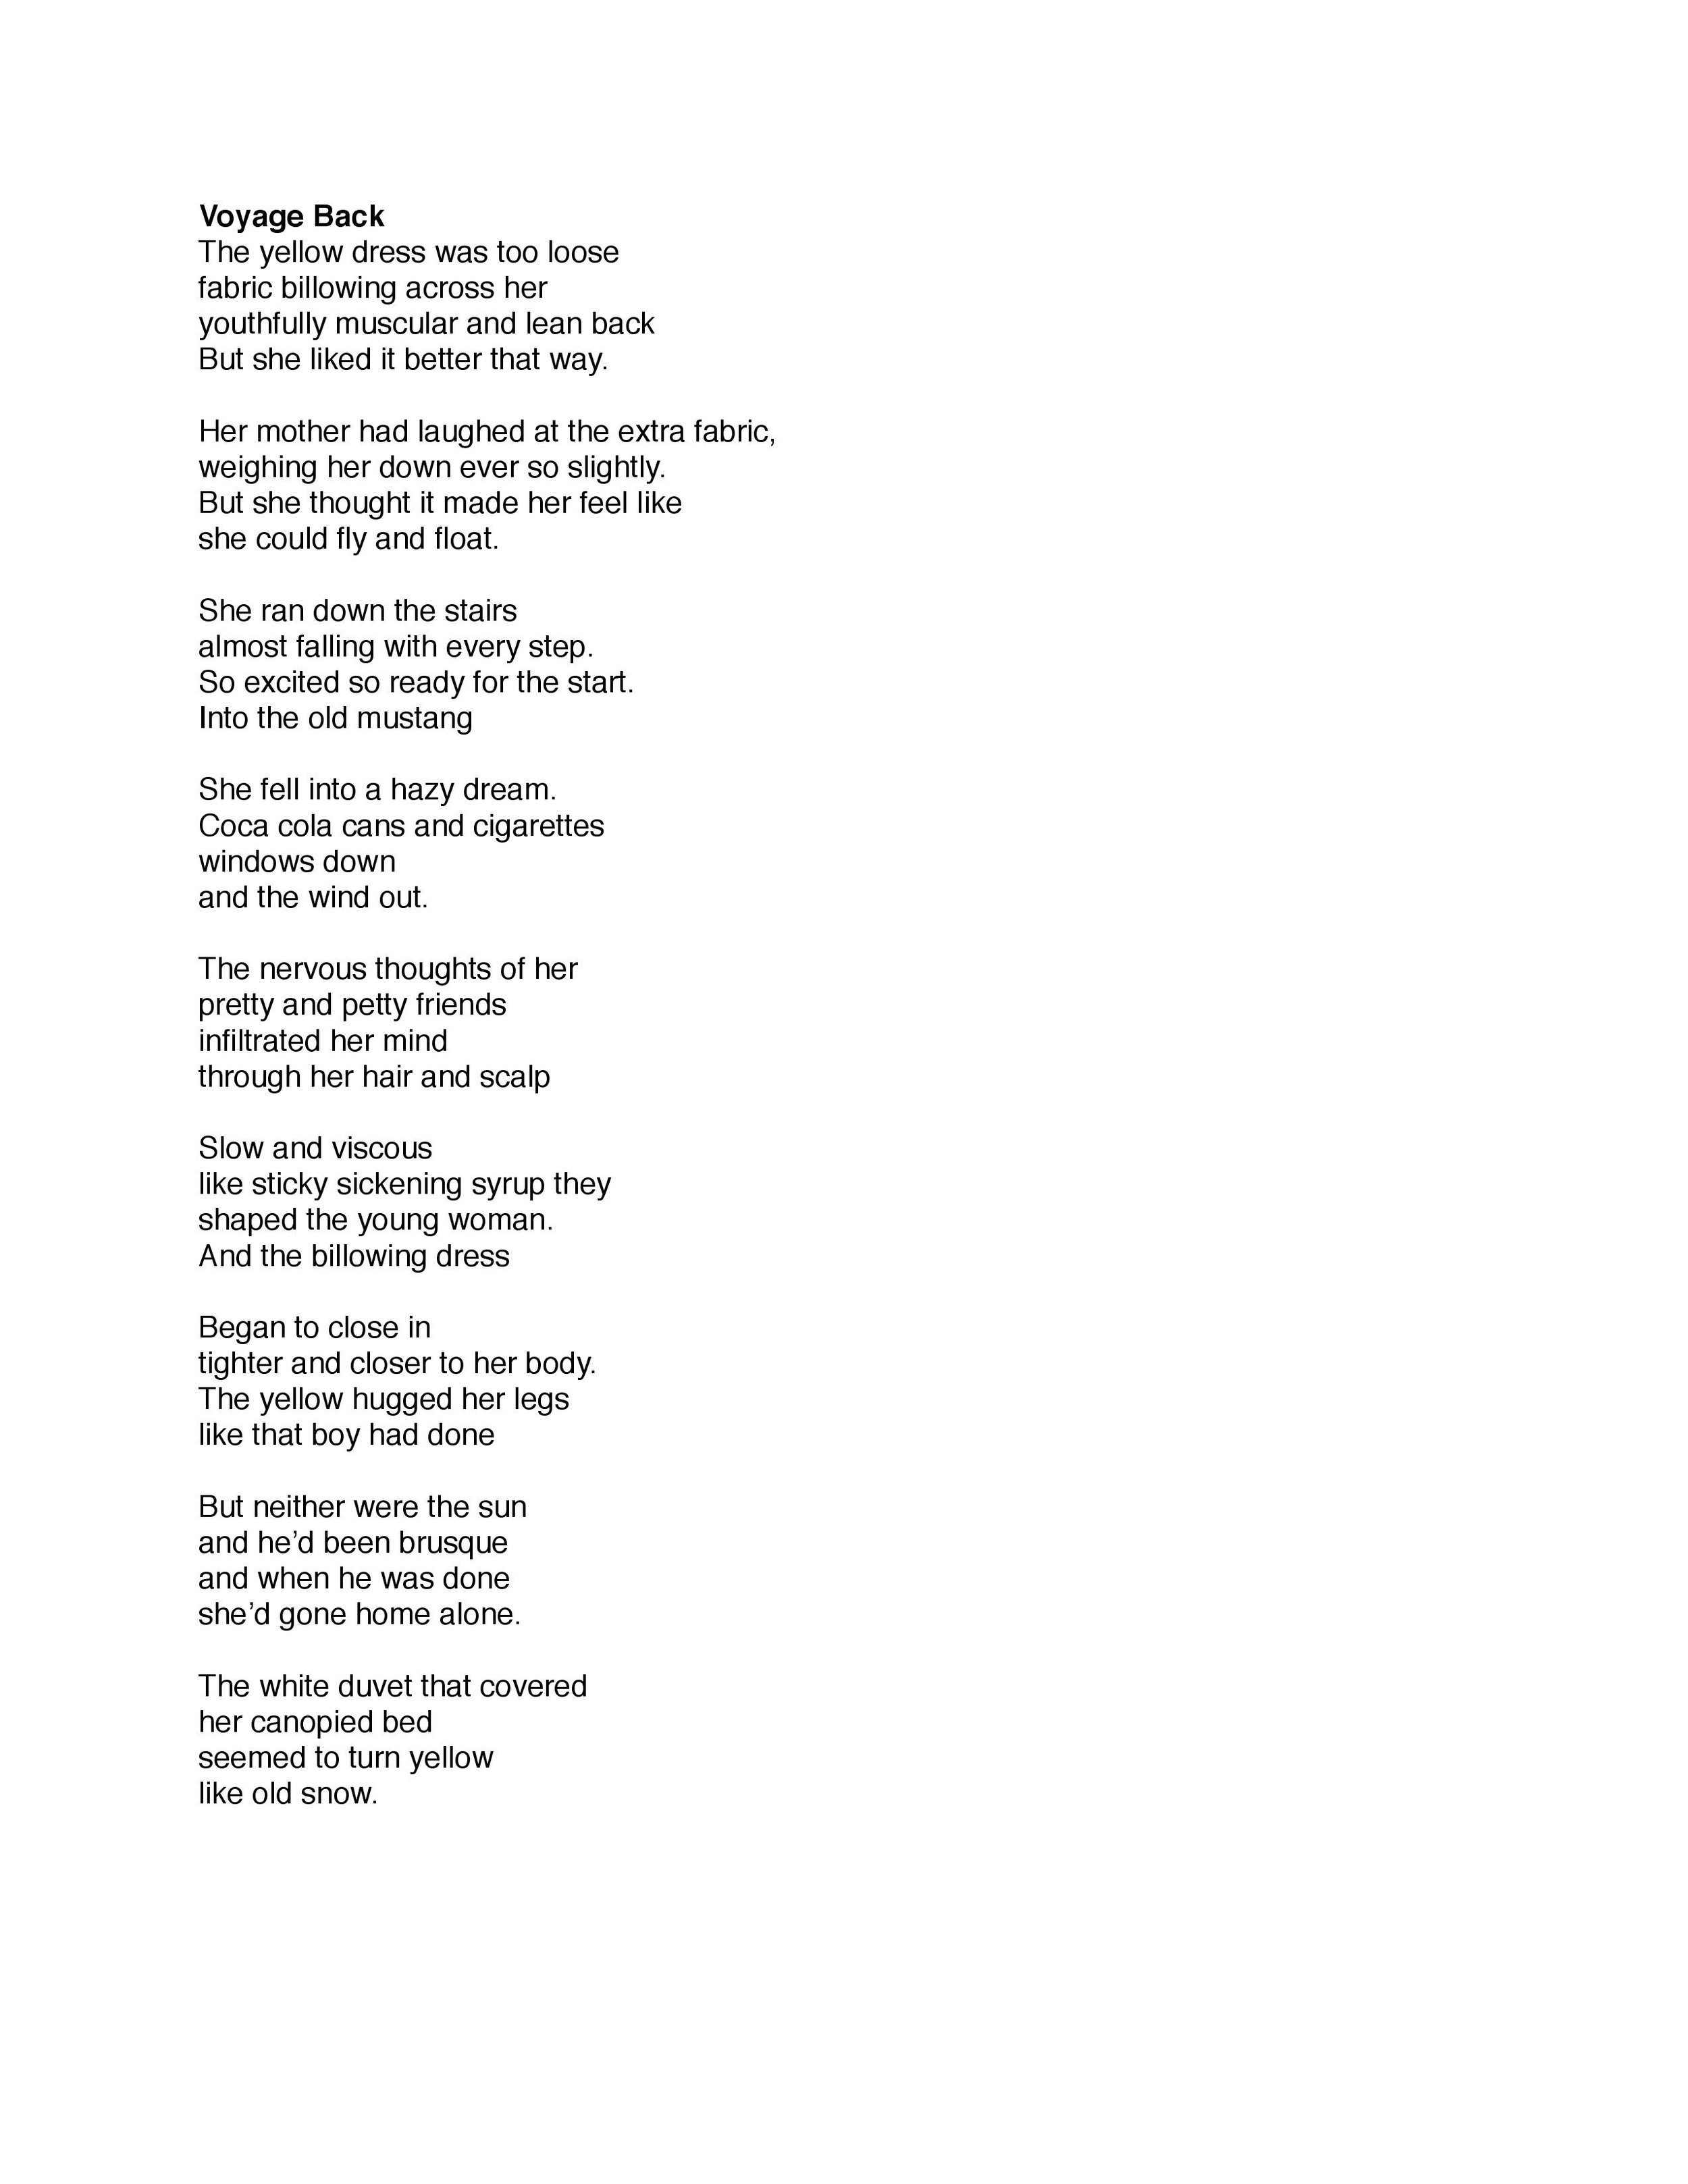 poems 4 vox-page-002.jpg